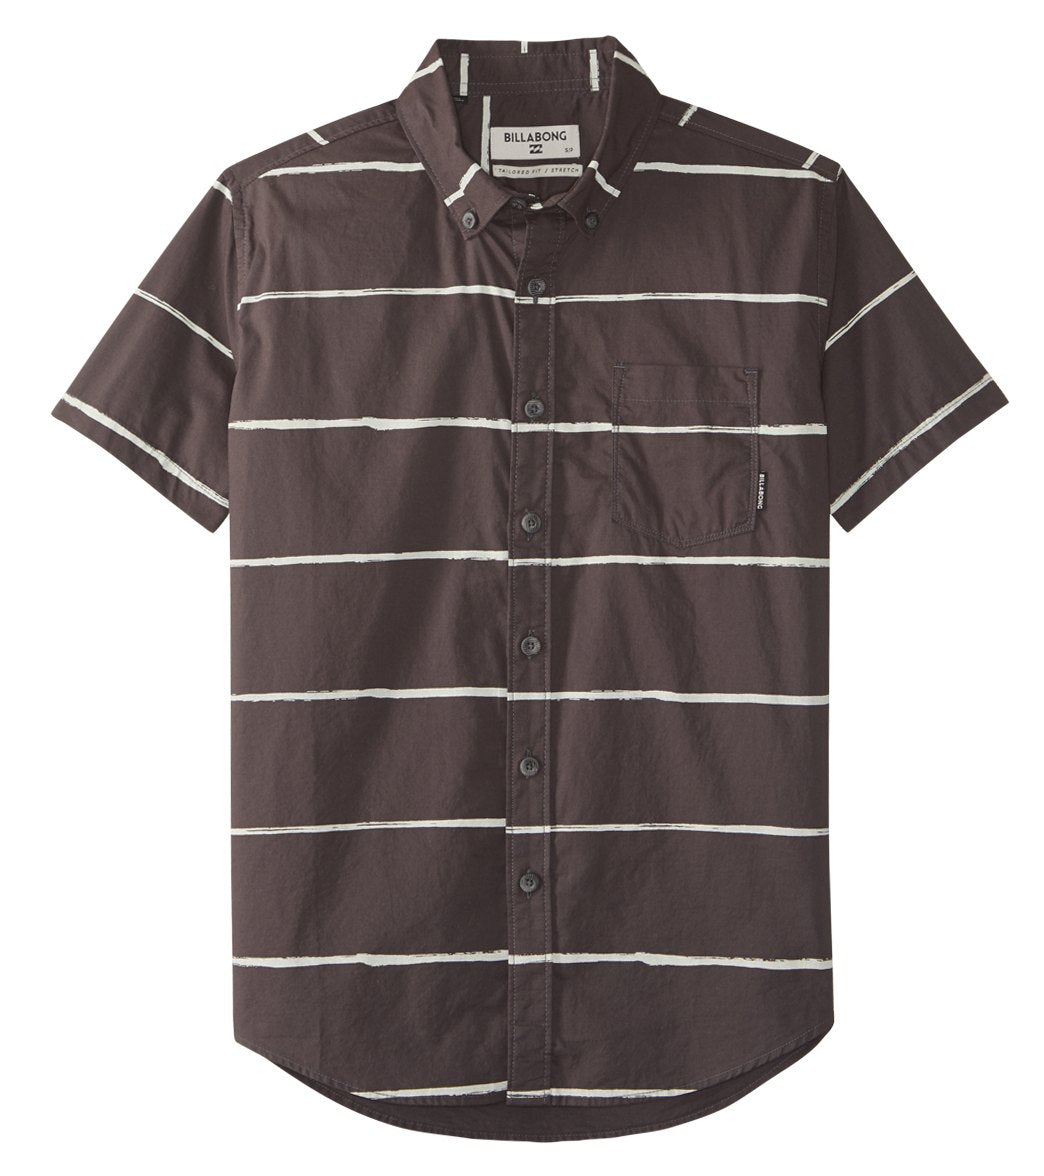 Billabong boys' sundays mini short sleeve shirt woven top 8-20 - char medium cotton - swimoutlet.com